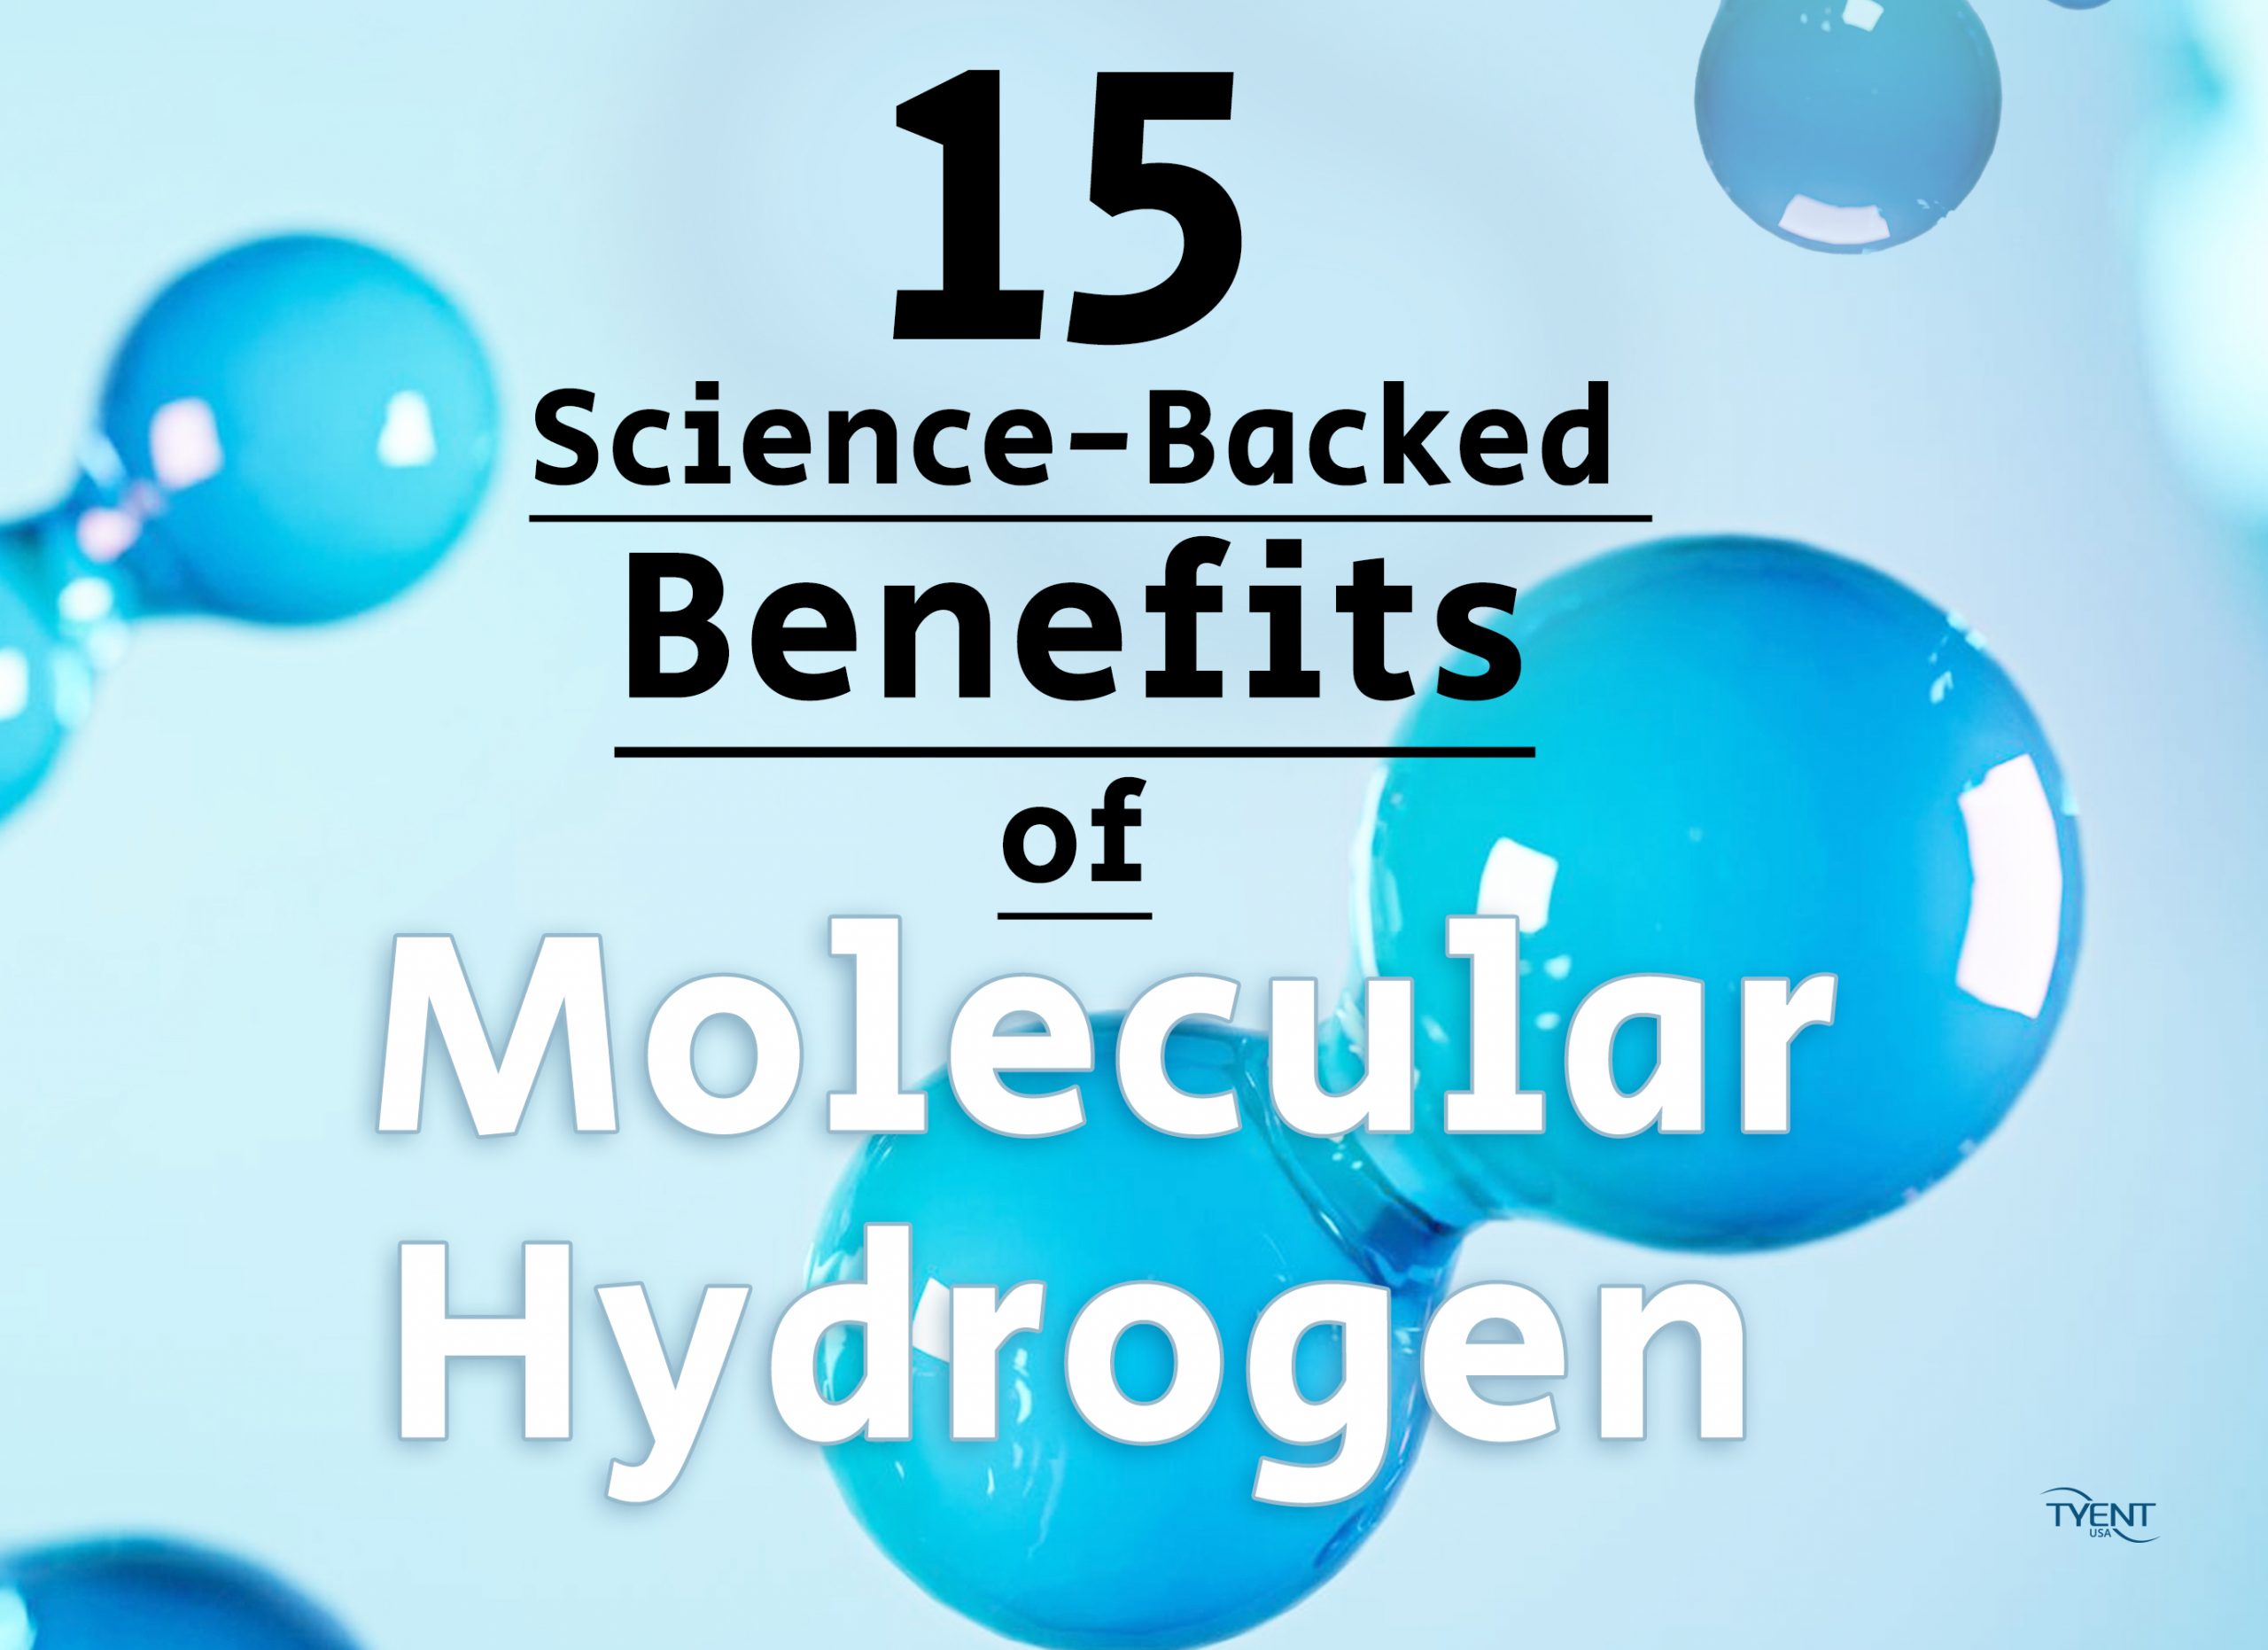 15 Science-Backed Benefits of Molecular Hydrogen